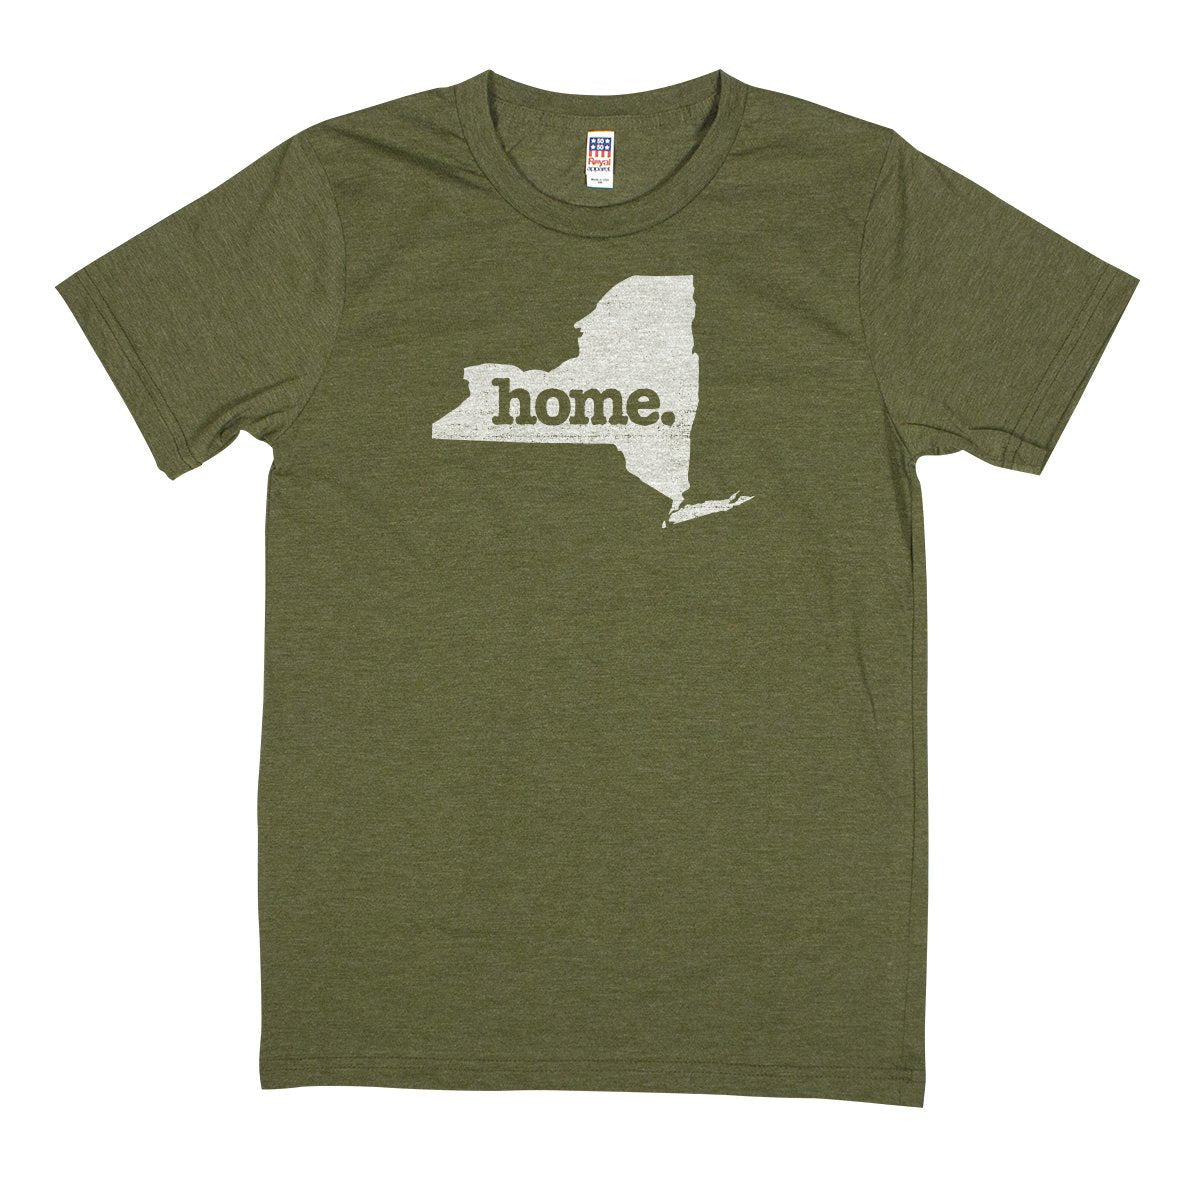 home. Men’s Unisex T-Shirt - Washington DC